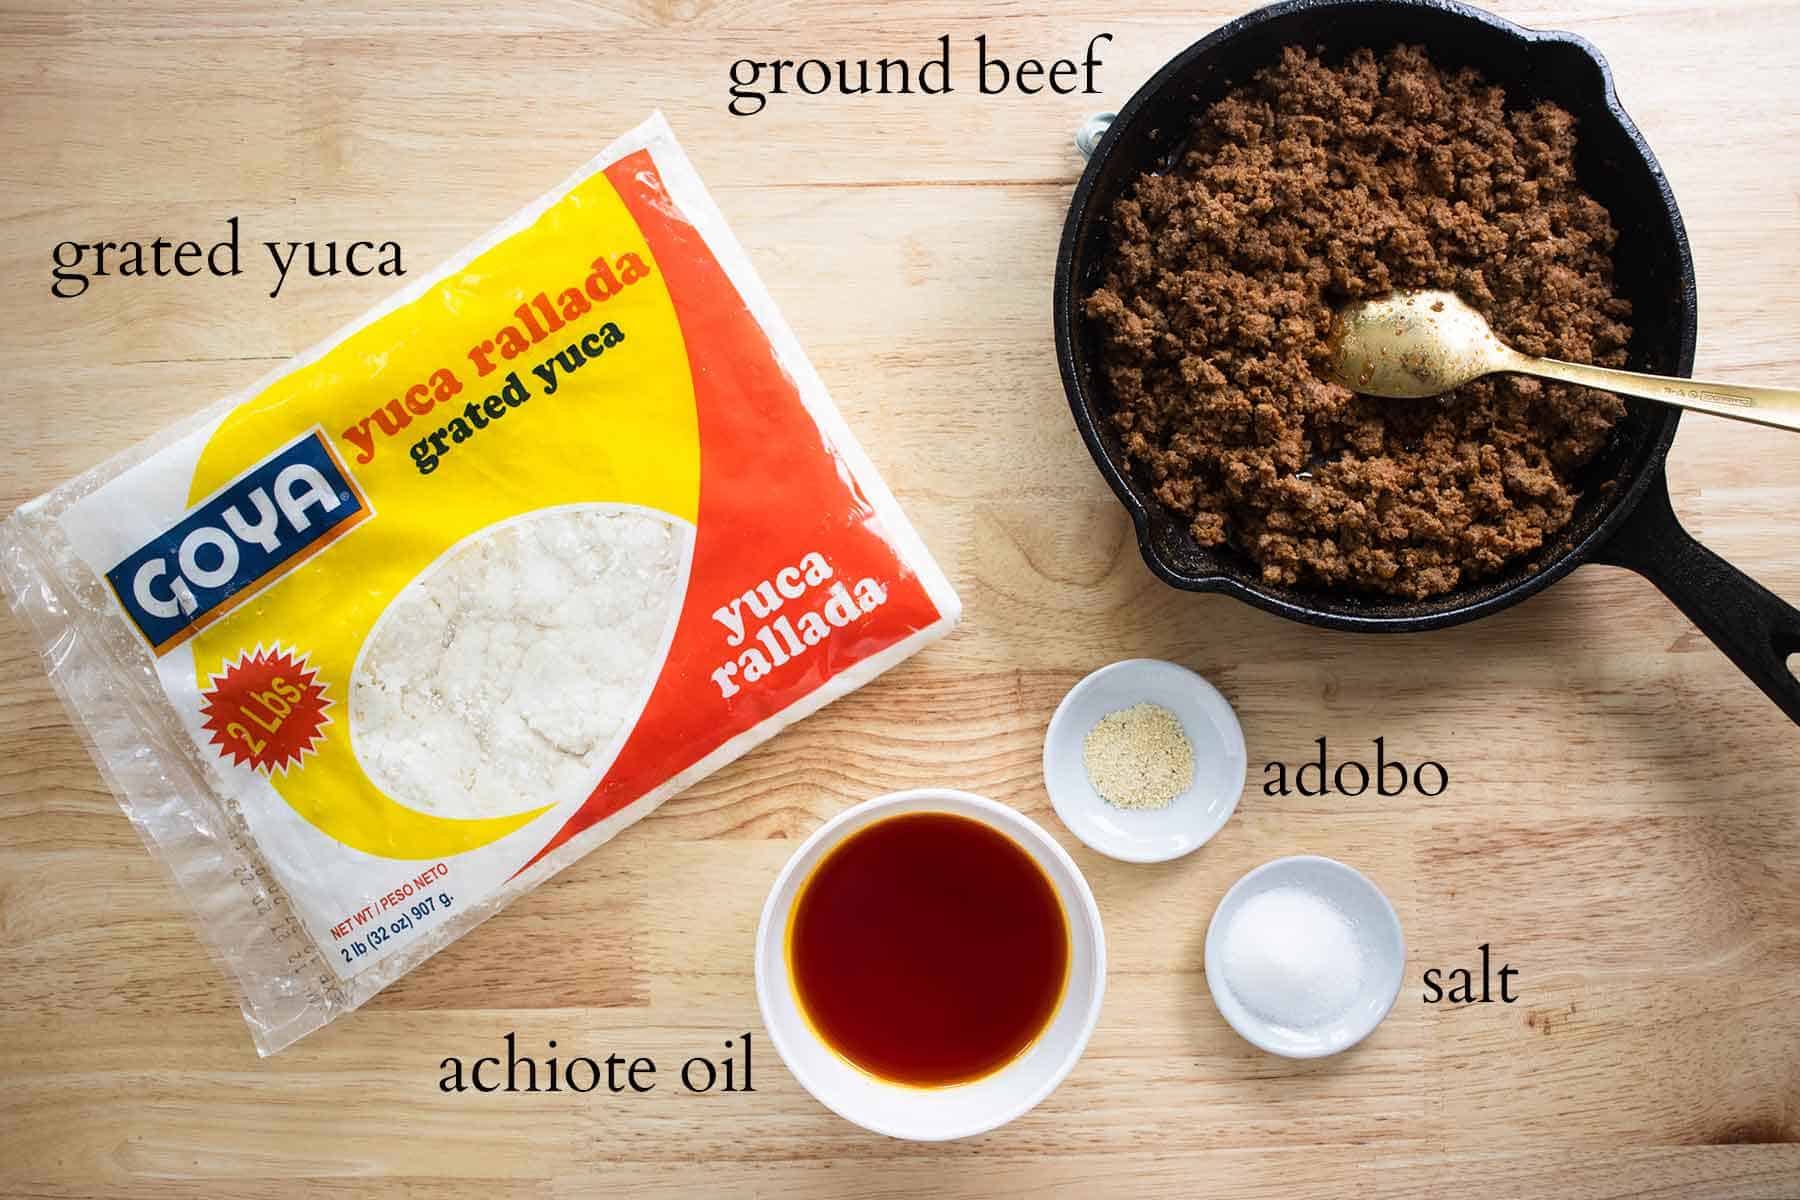 all the ingredients needed to make alcapurria de yuca.